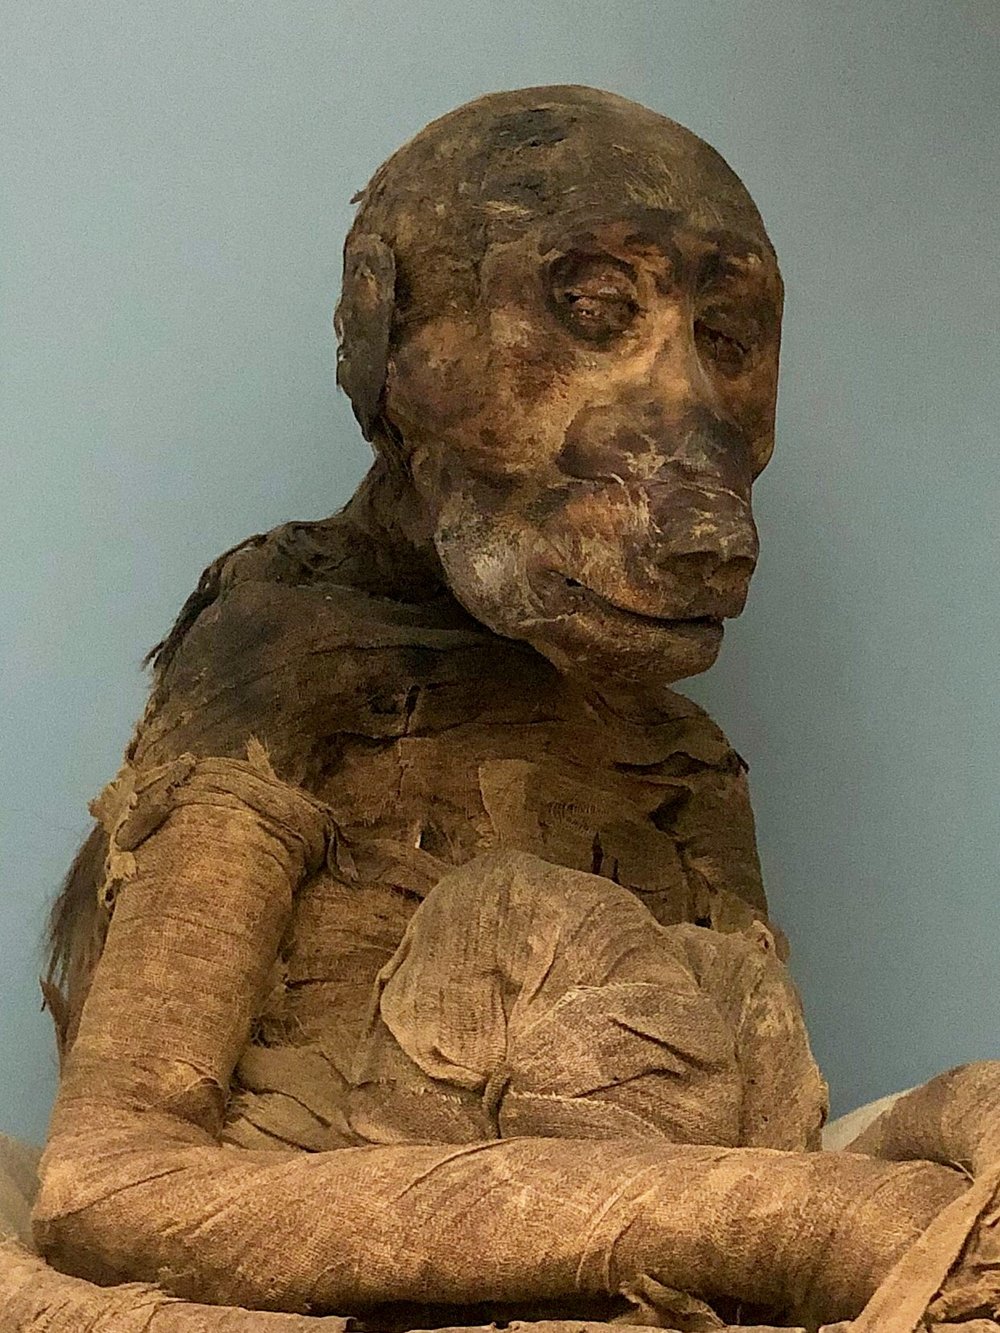 A side view of a mummified baboon